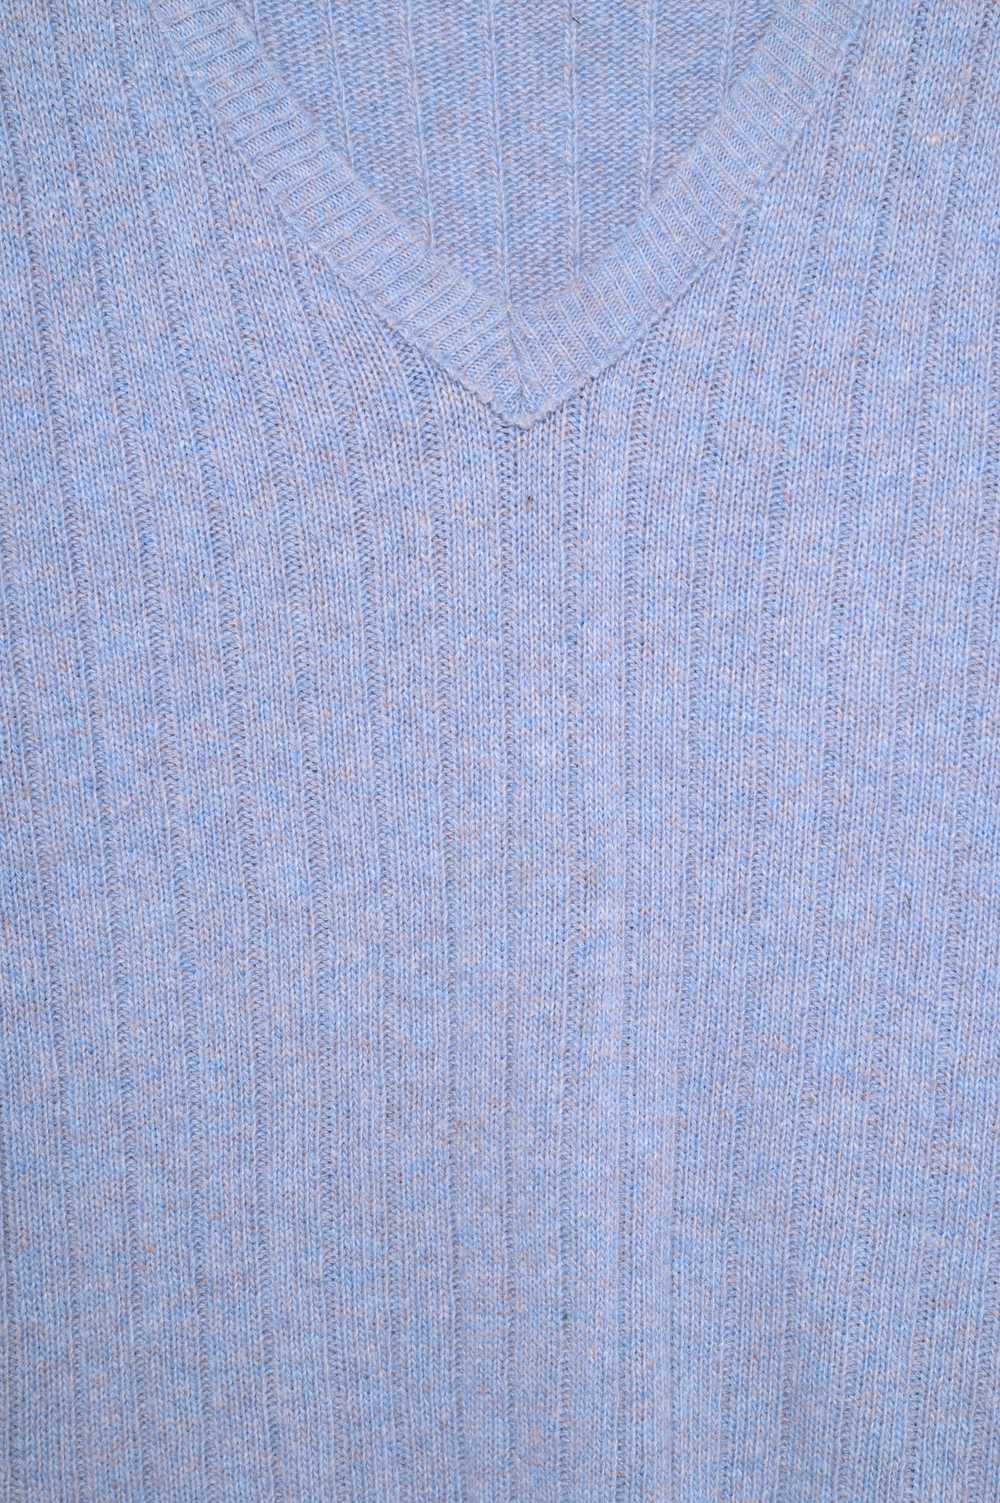 1960s Marled Sweater Vest - image 2